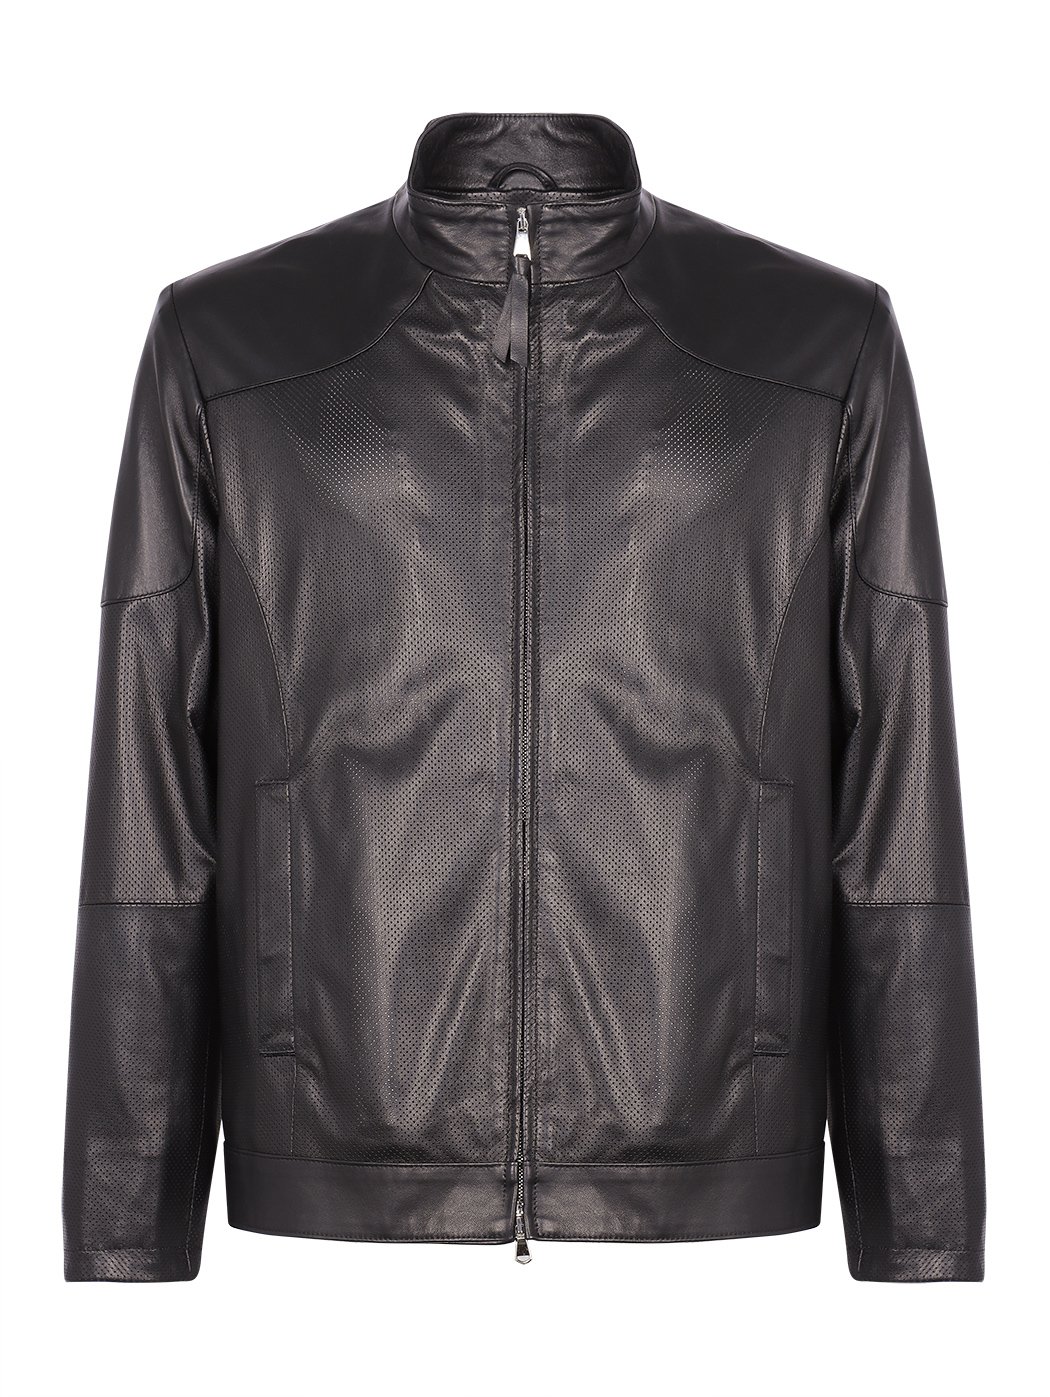 Biker Jacket Perforated Texture Black